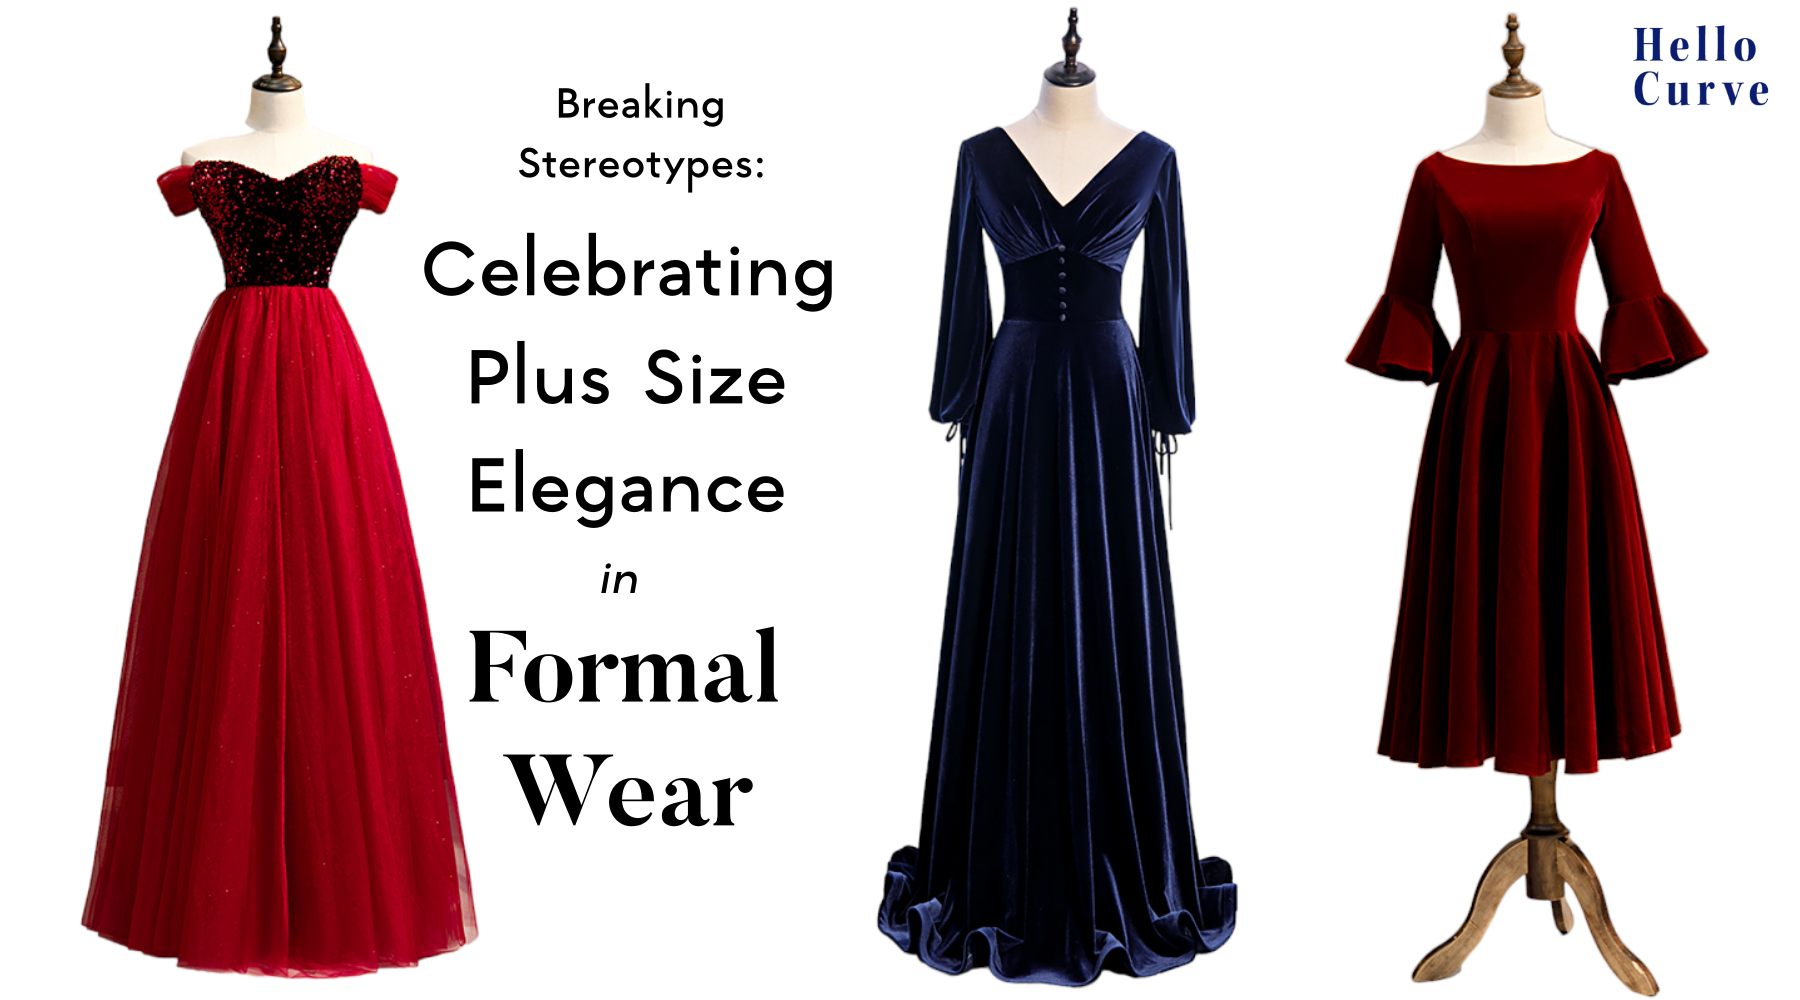 Breaking Stereotypes: Celebrating Plus Size Elegance in Formal Wear